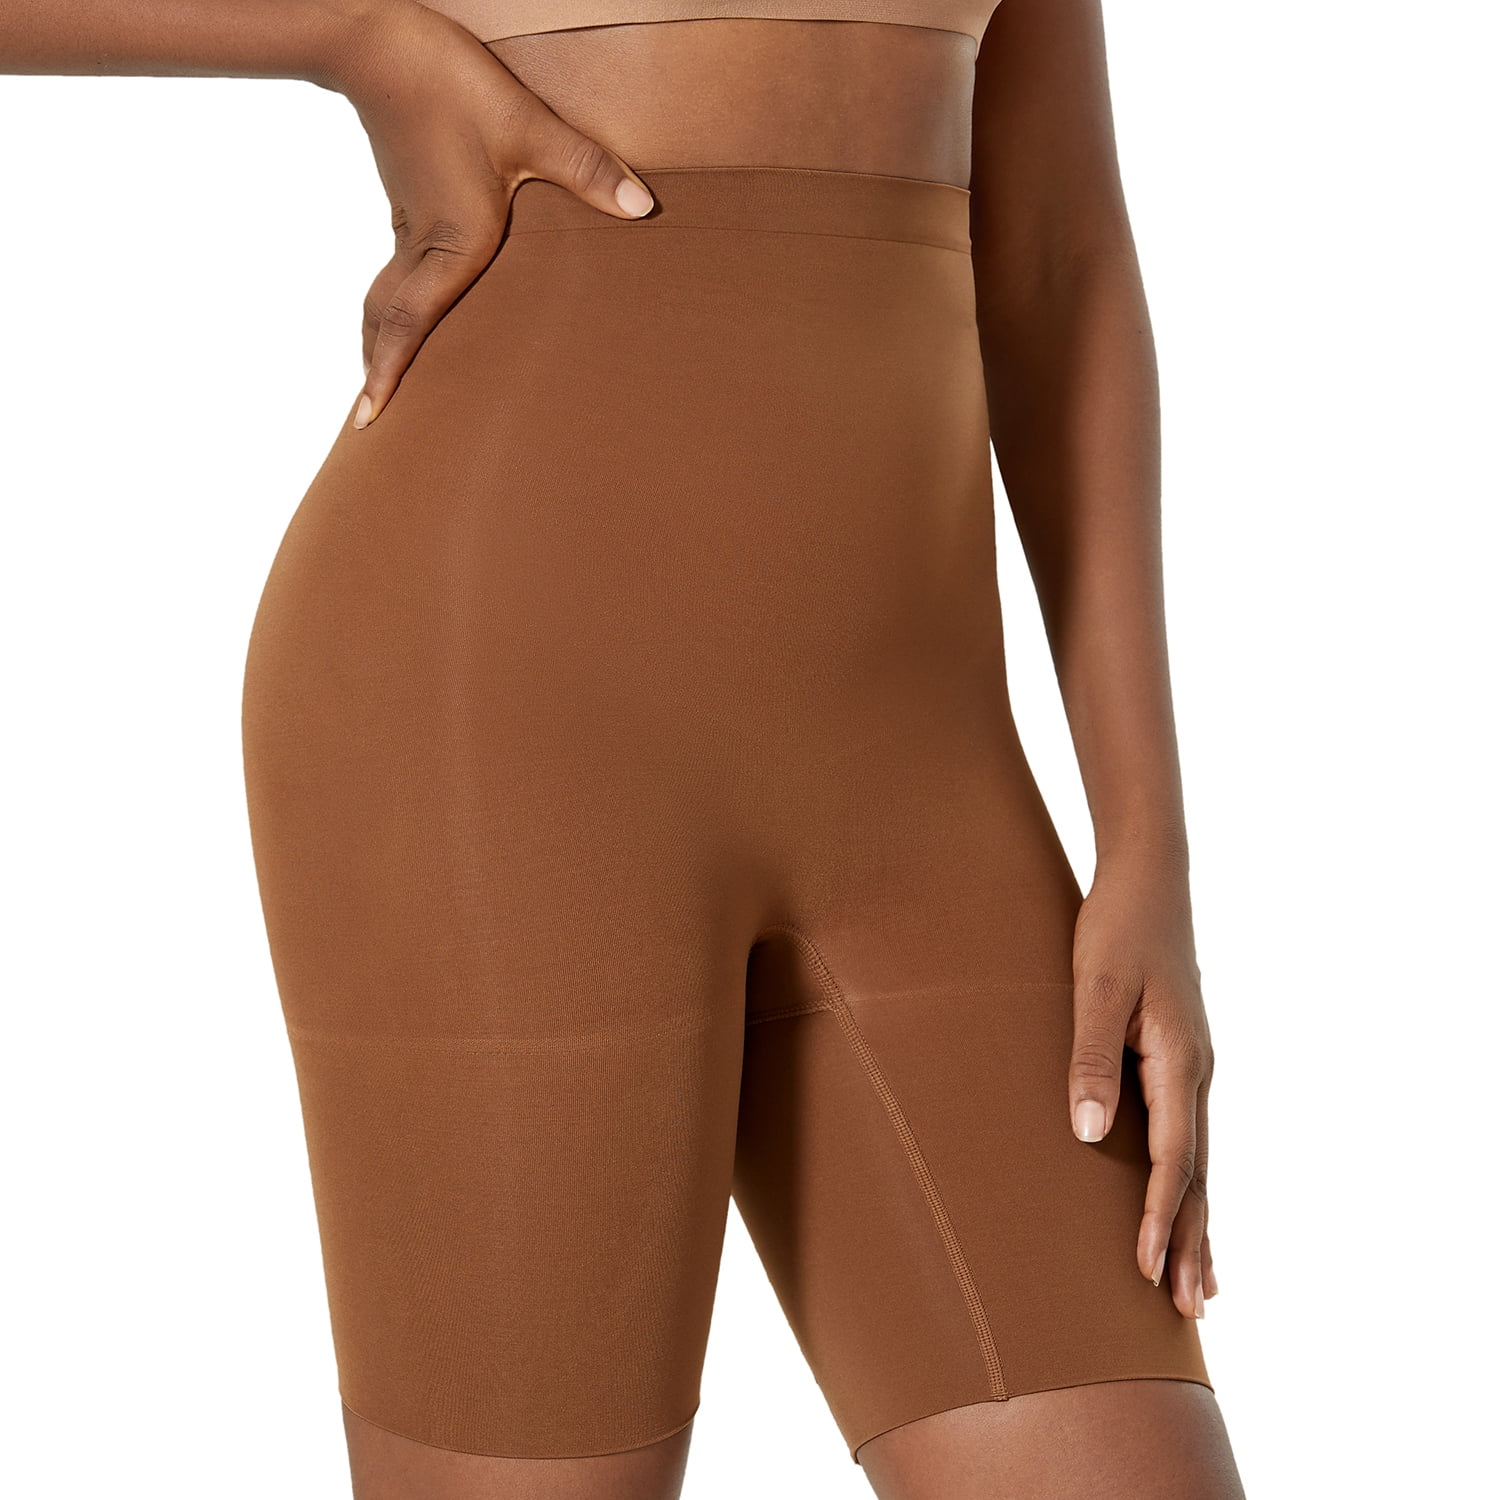 DELIMIRA Women's Tummy Control Shapewear Thigh Slimmer High Waist Shorts